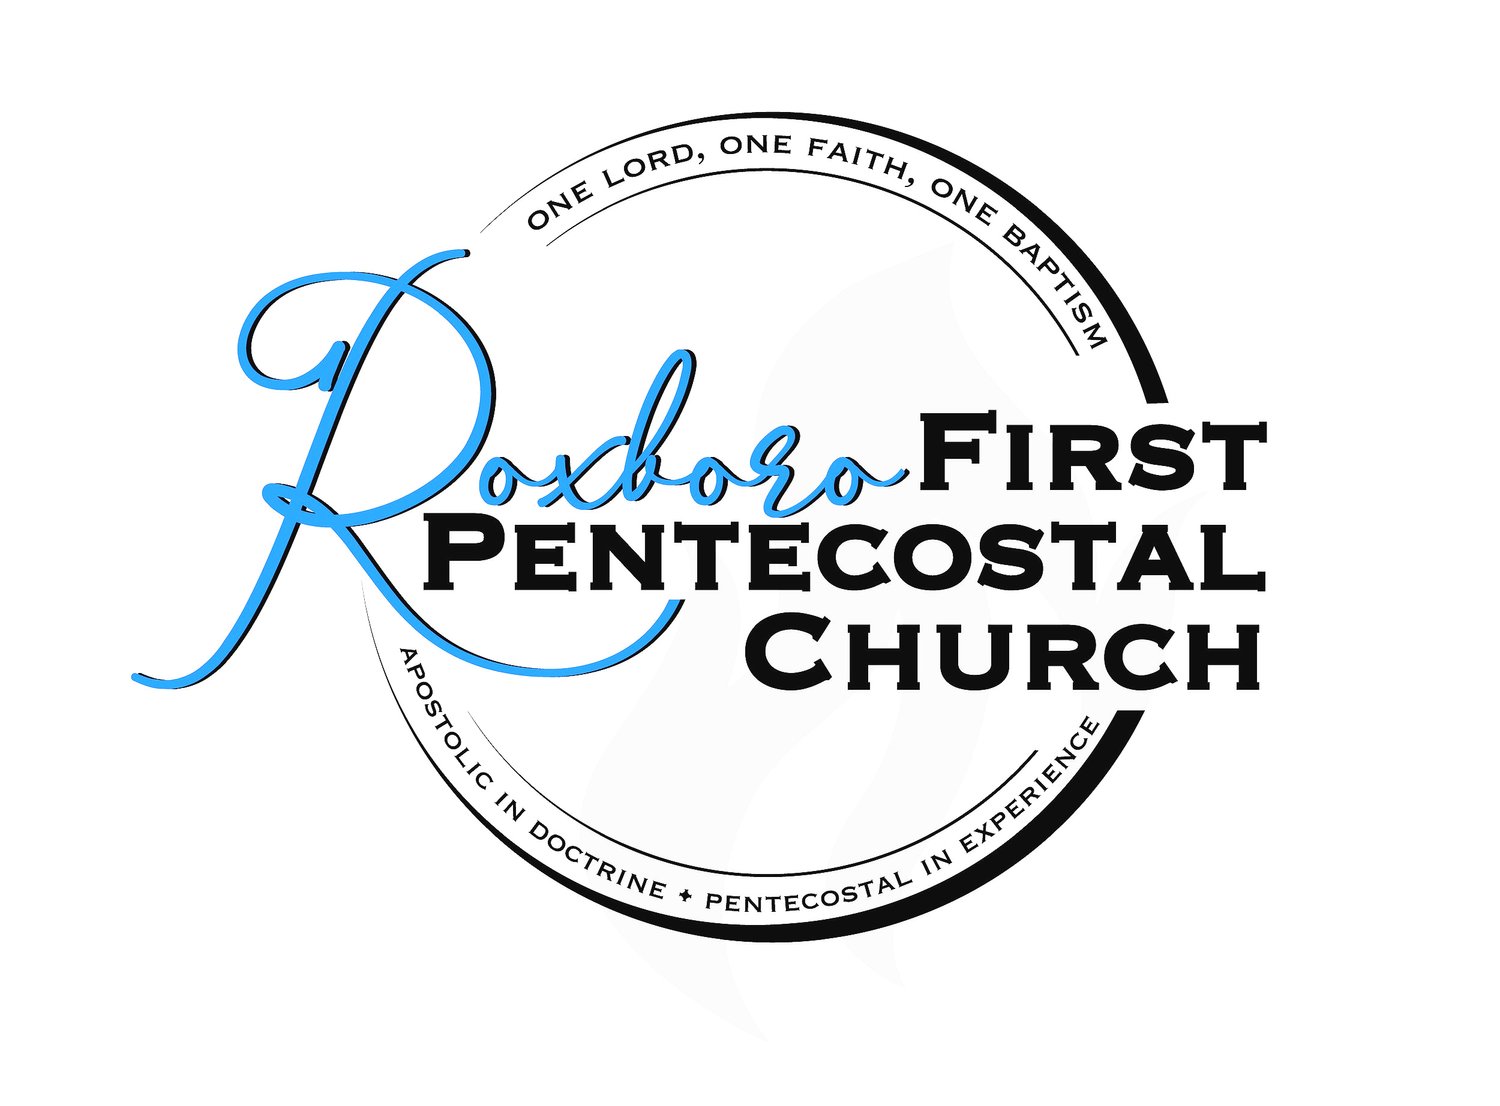 Roxboro First Pentecostal Church